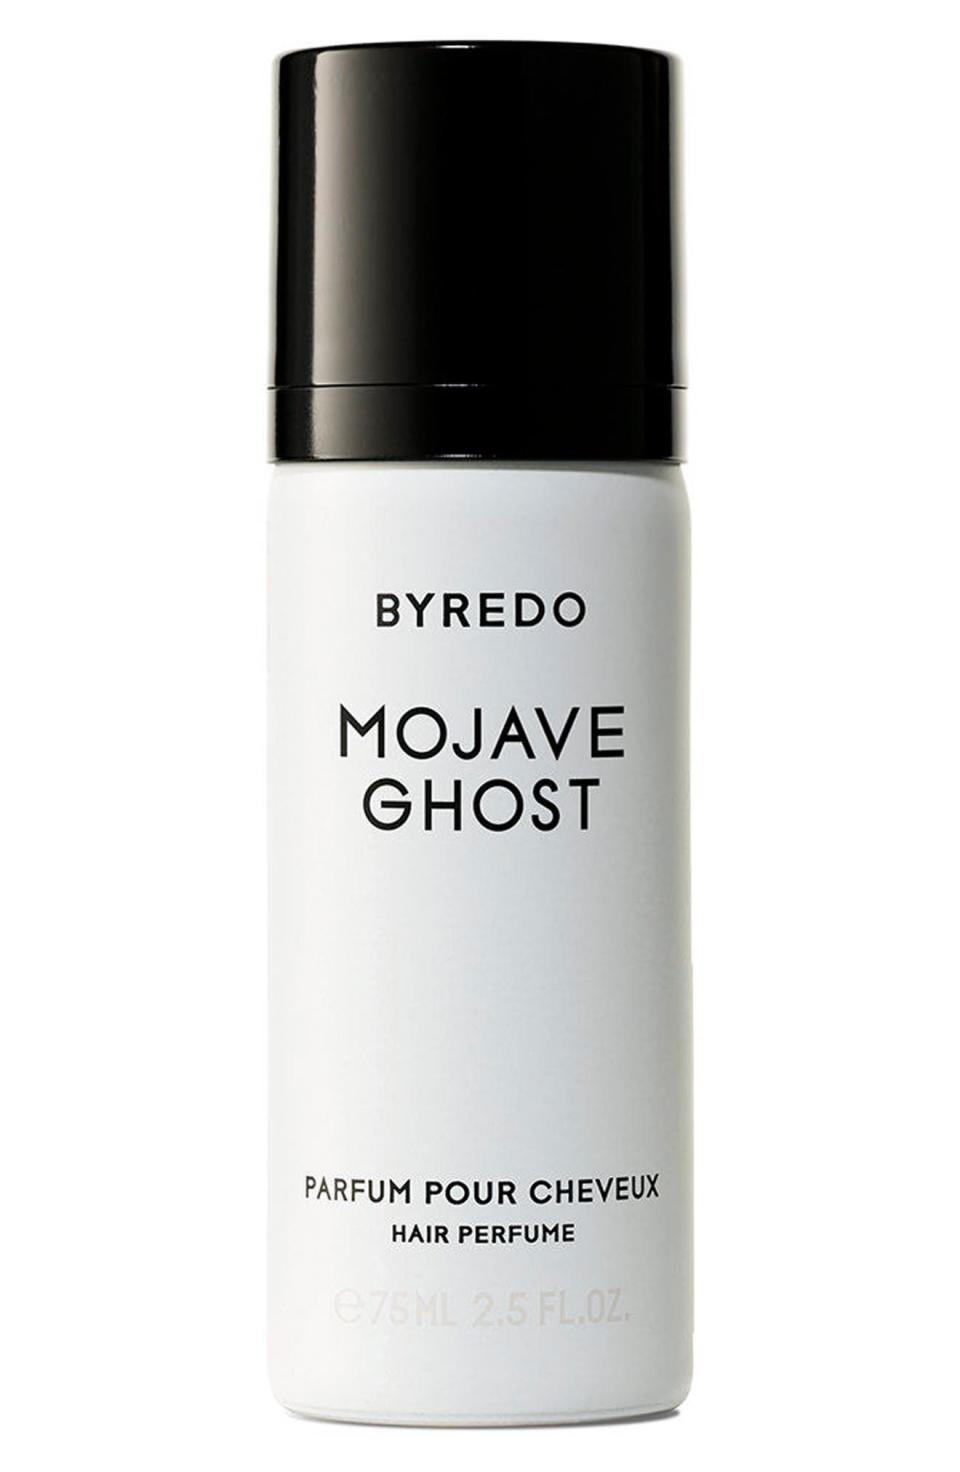 3) Byredo Mojave Ghost Hair Perfume